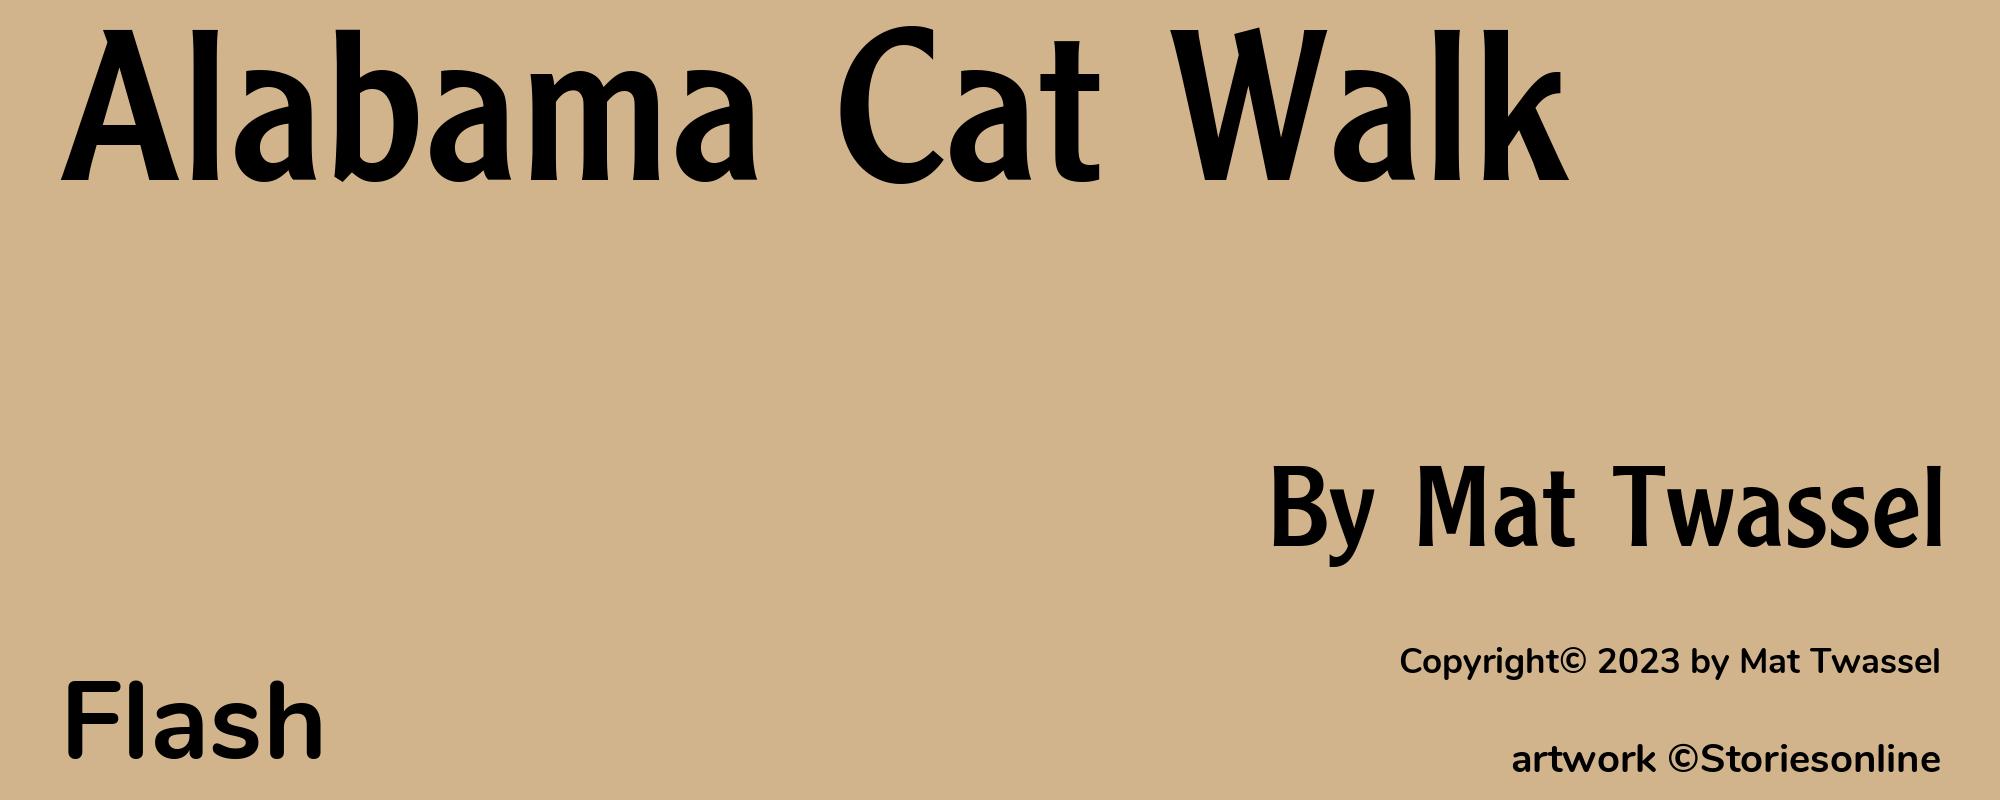 Alabama Cat Walk - Cover